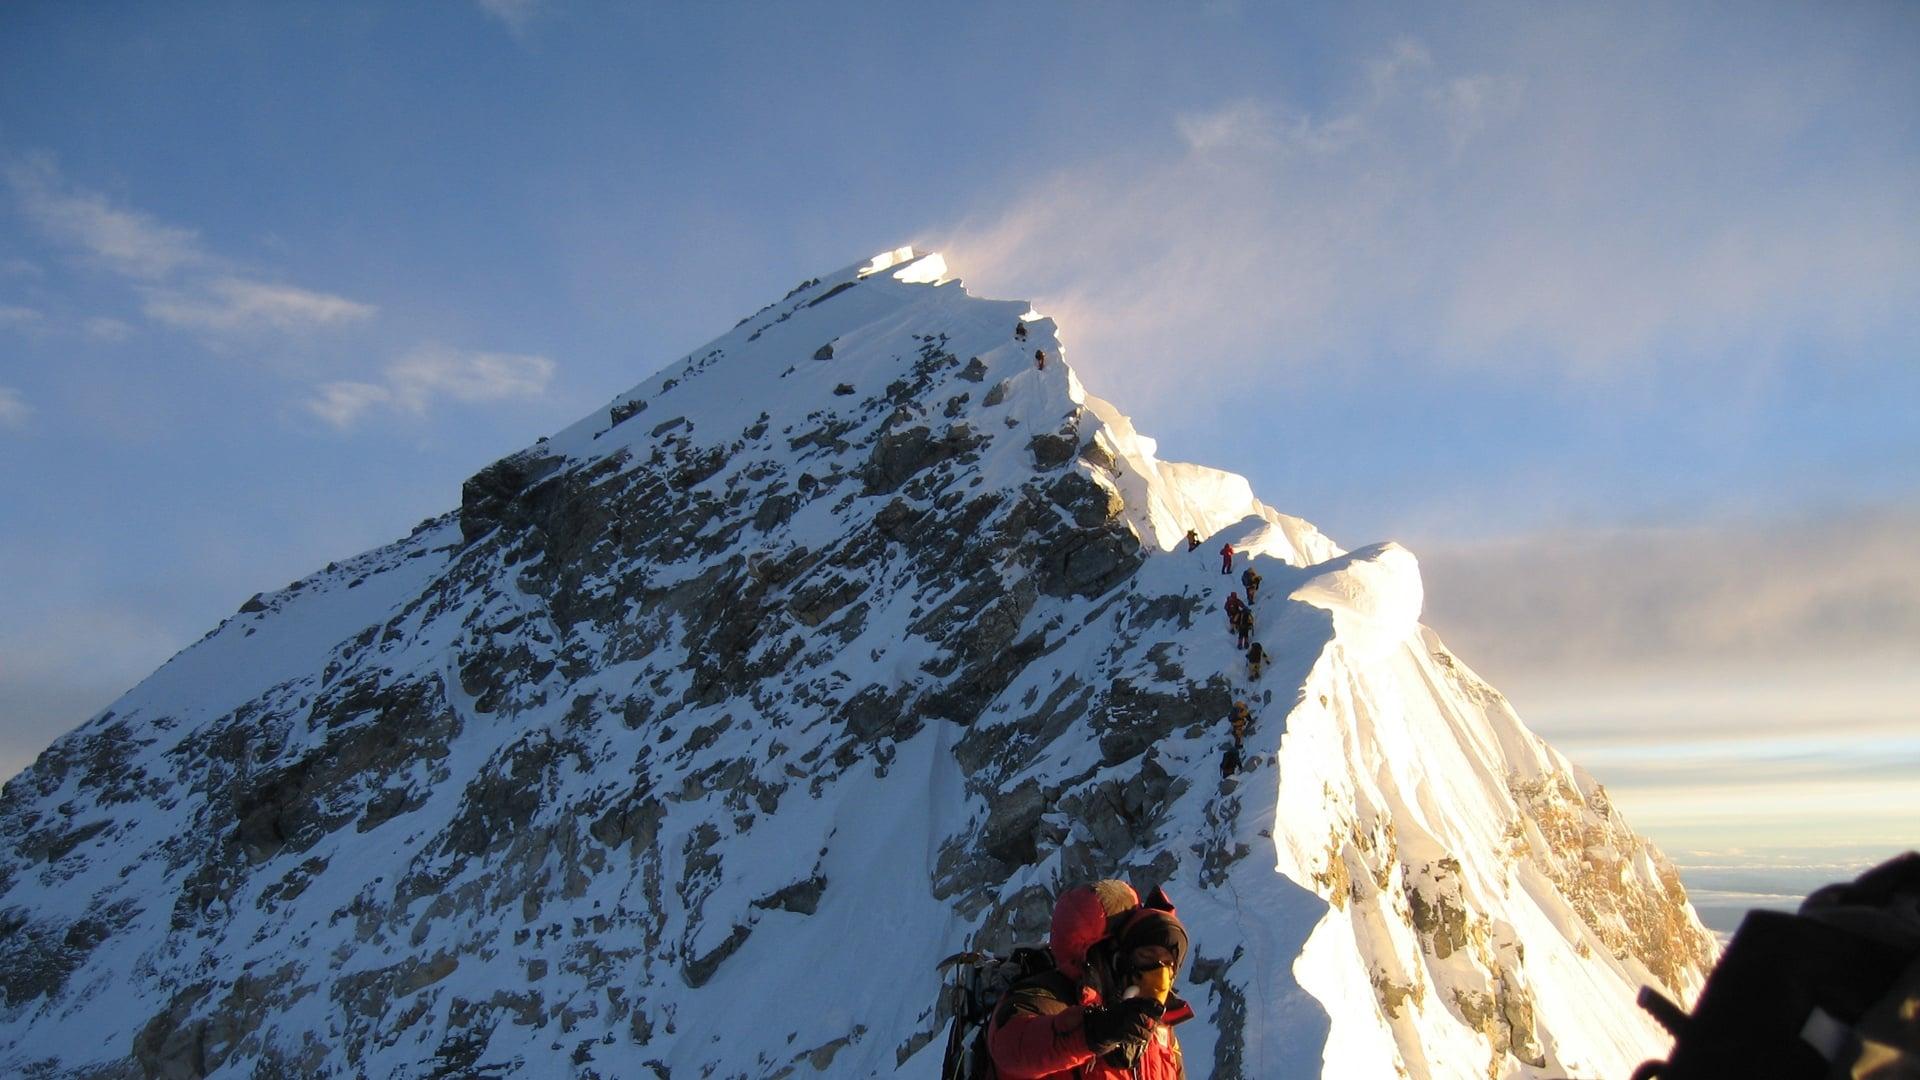 Everest backdrop